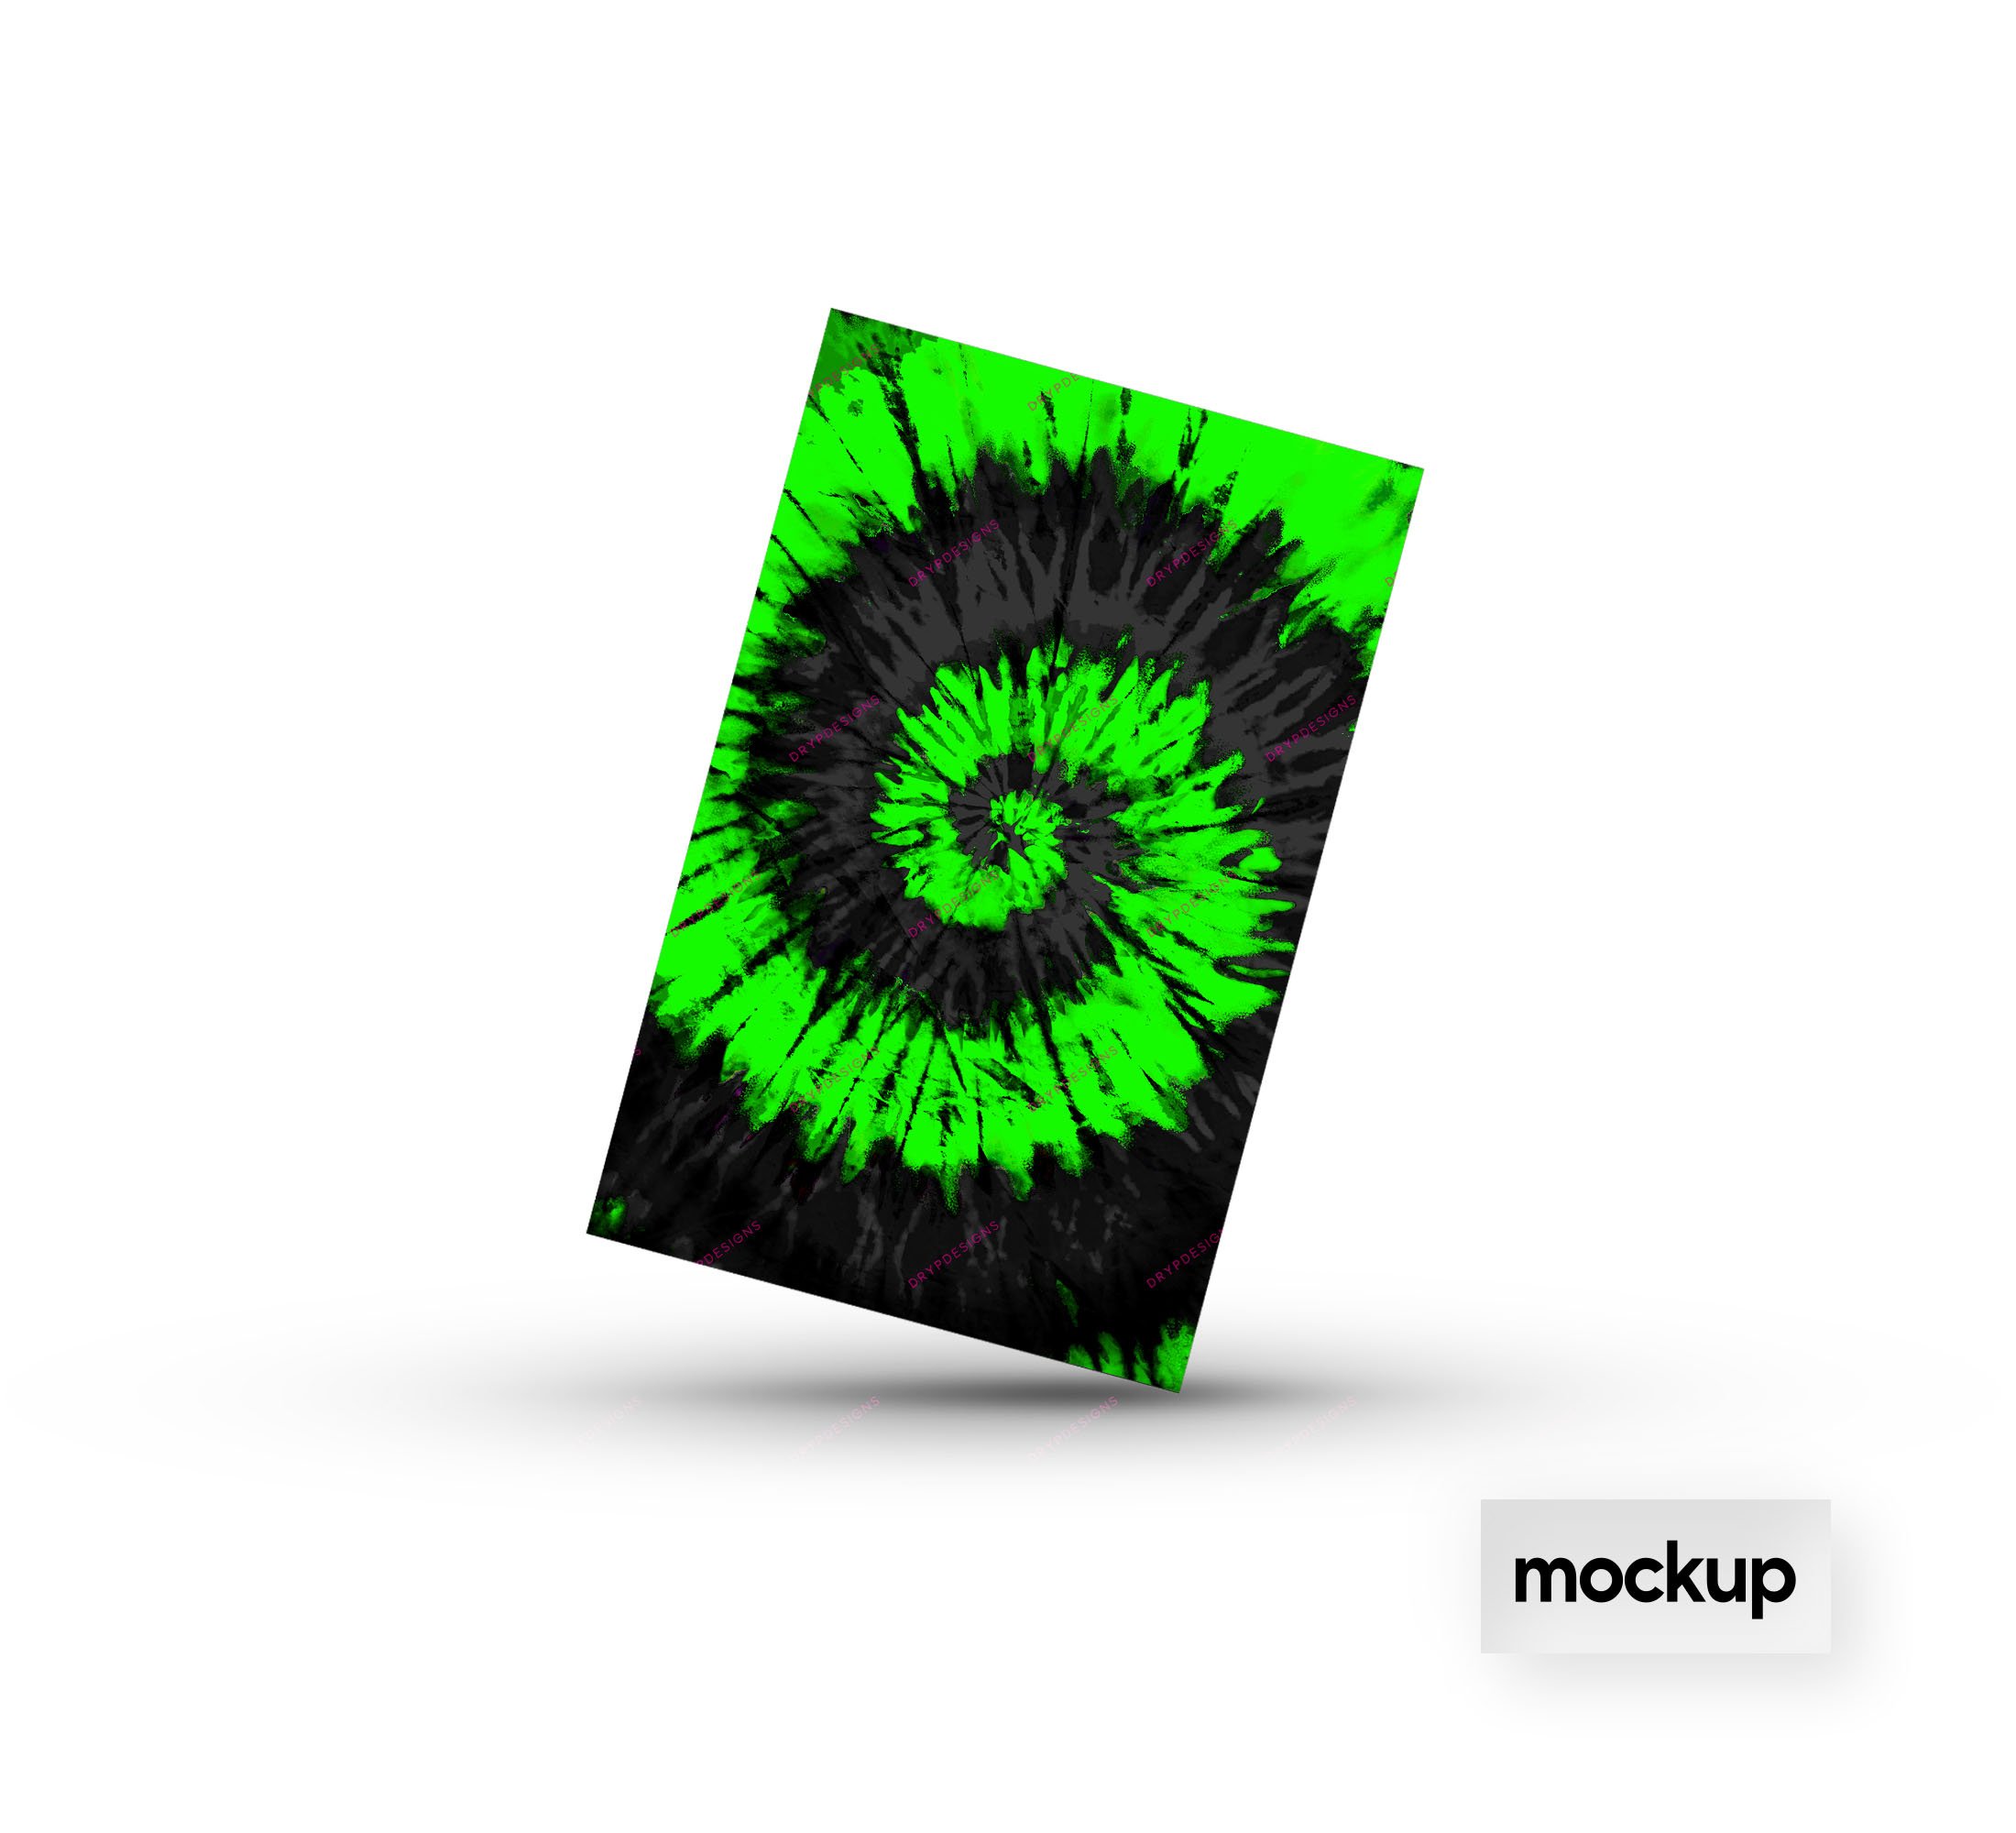 Green Tie-Dye Digital Paper Background Texture Lime Green Neon Tie Dye PNG Black Digital Download File